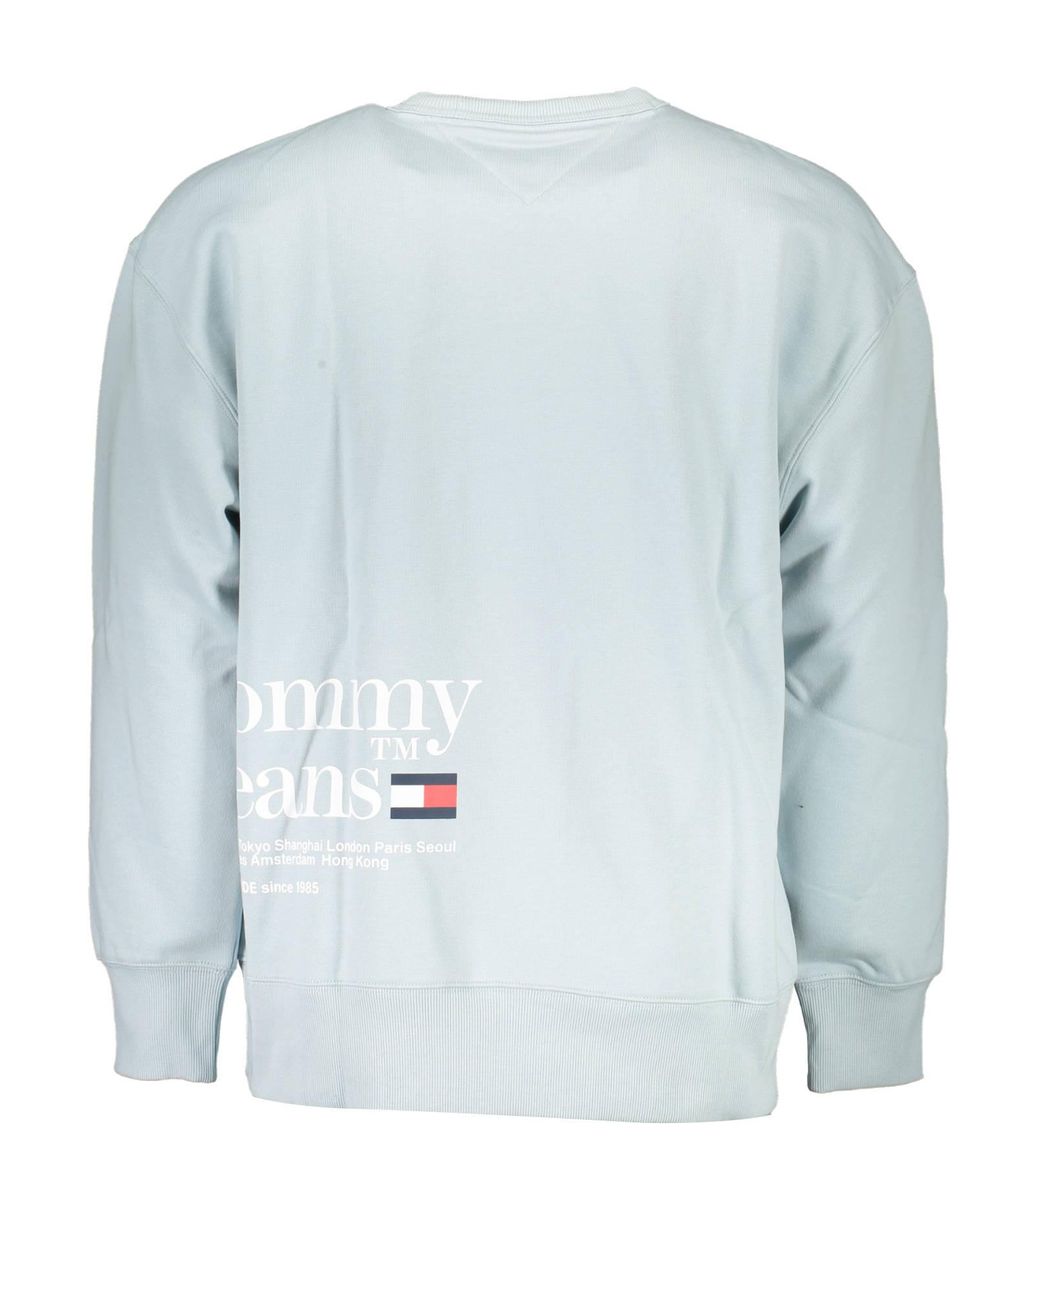 Tommy Hilfiger Light Blue Sweater for Men | Lyst